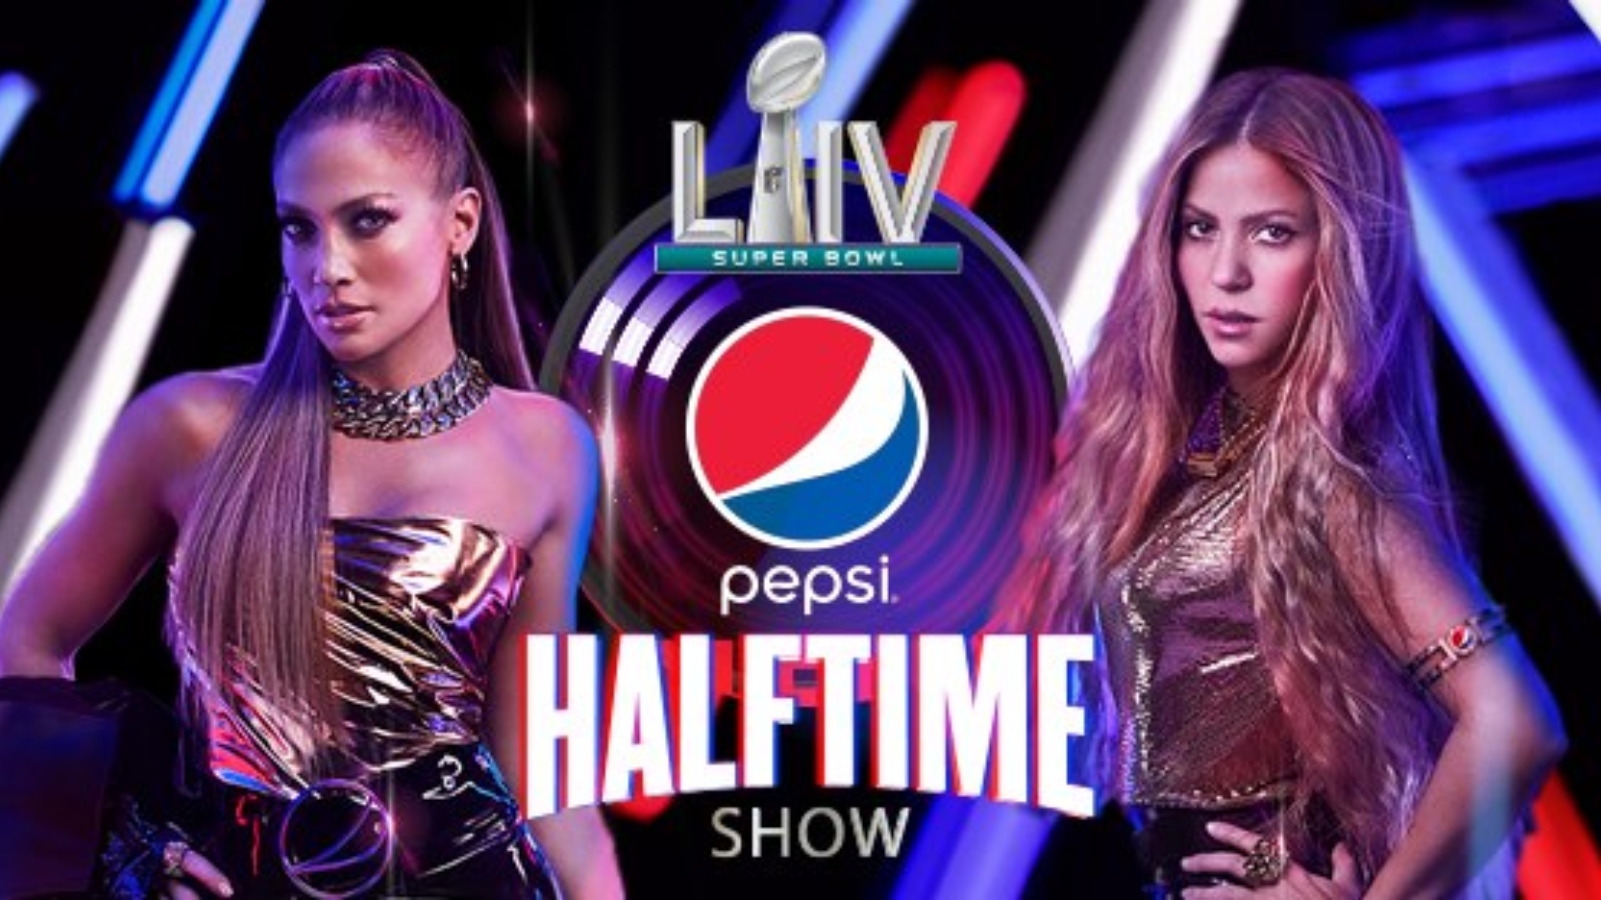 Jennifer Lopez, left, and Shakira headlined the Super Bowl LIV Halftime Show at Hard Rock Stadium, Miami. Photo via Facebook